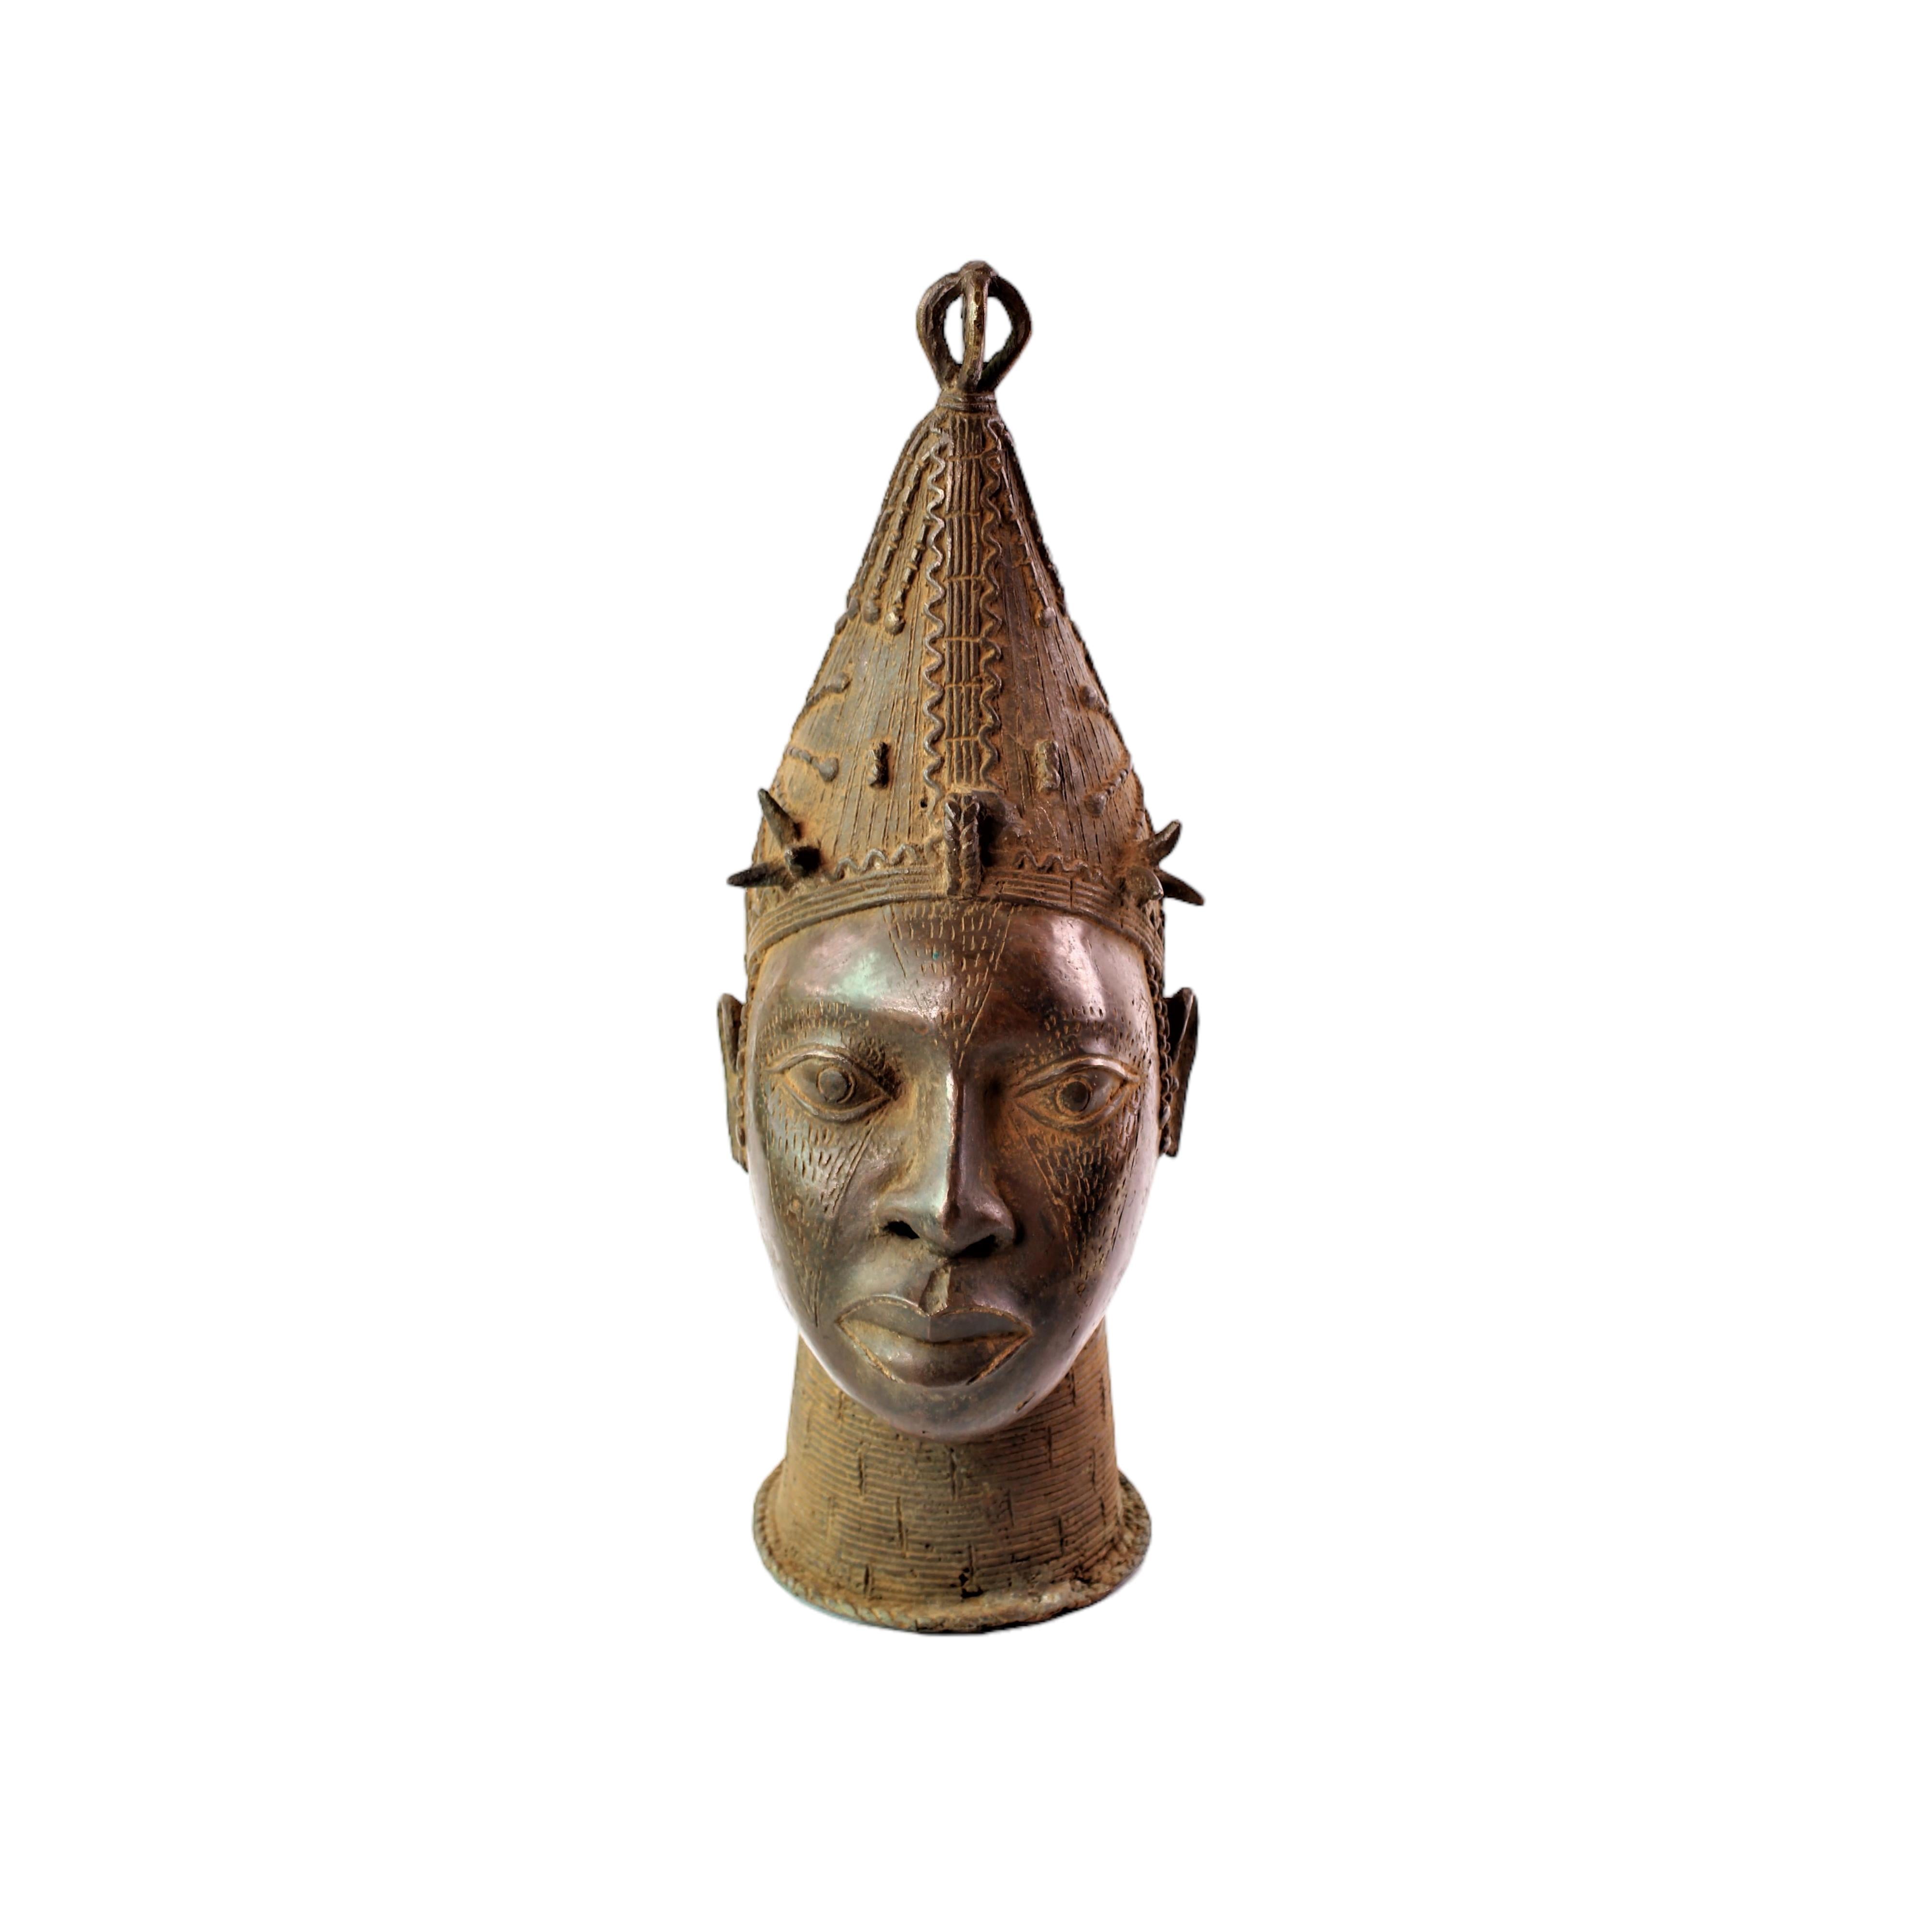 Yoruba Tribe Heads ~20.1" Tall